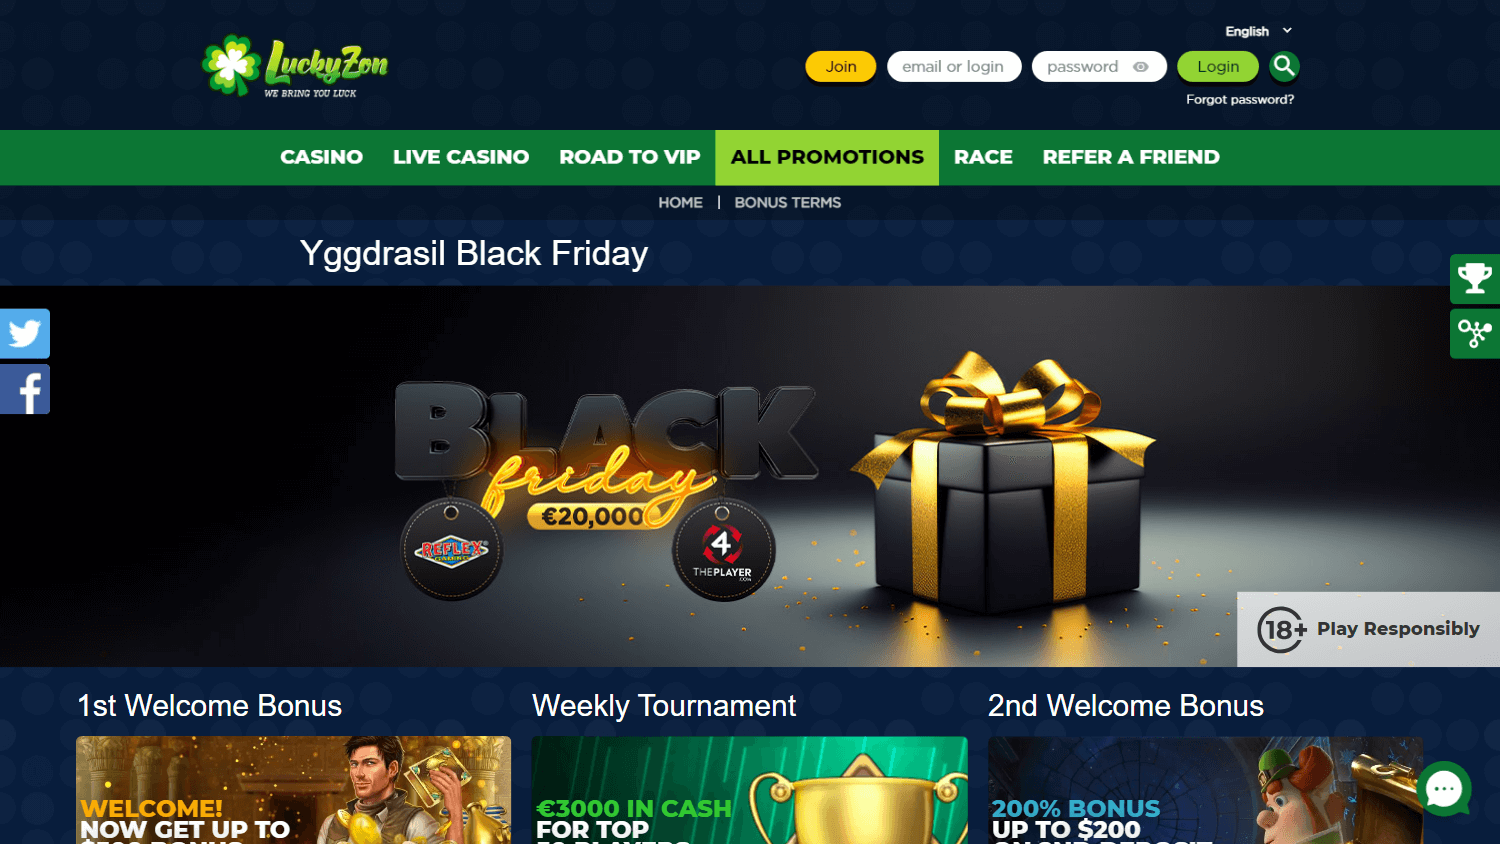 luckyzon_casino_promotions_desktop